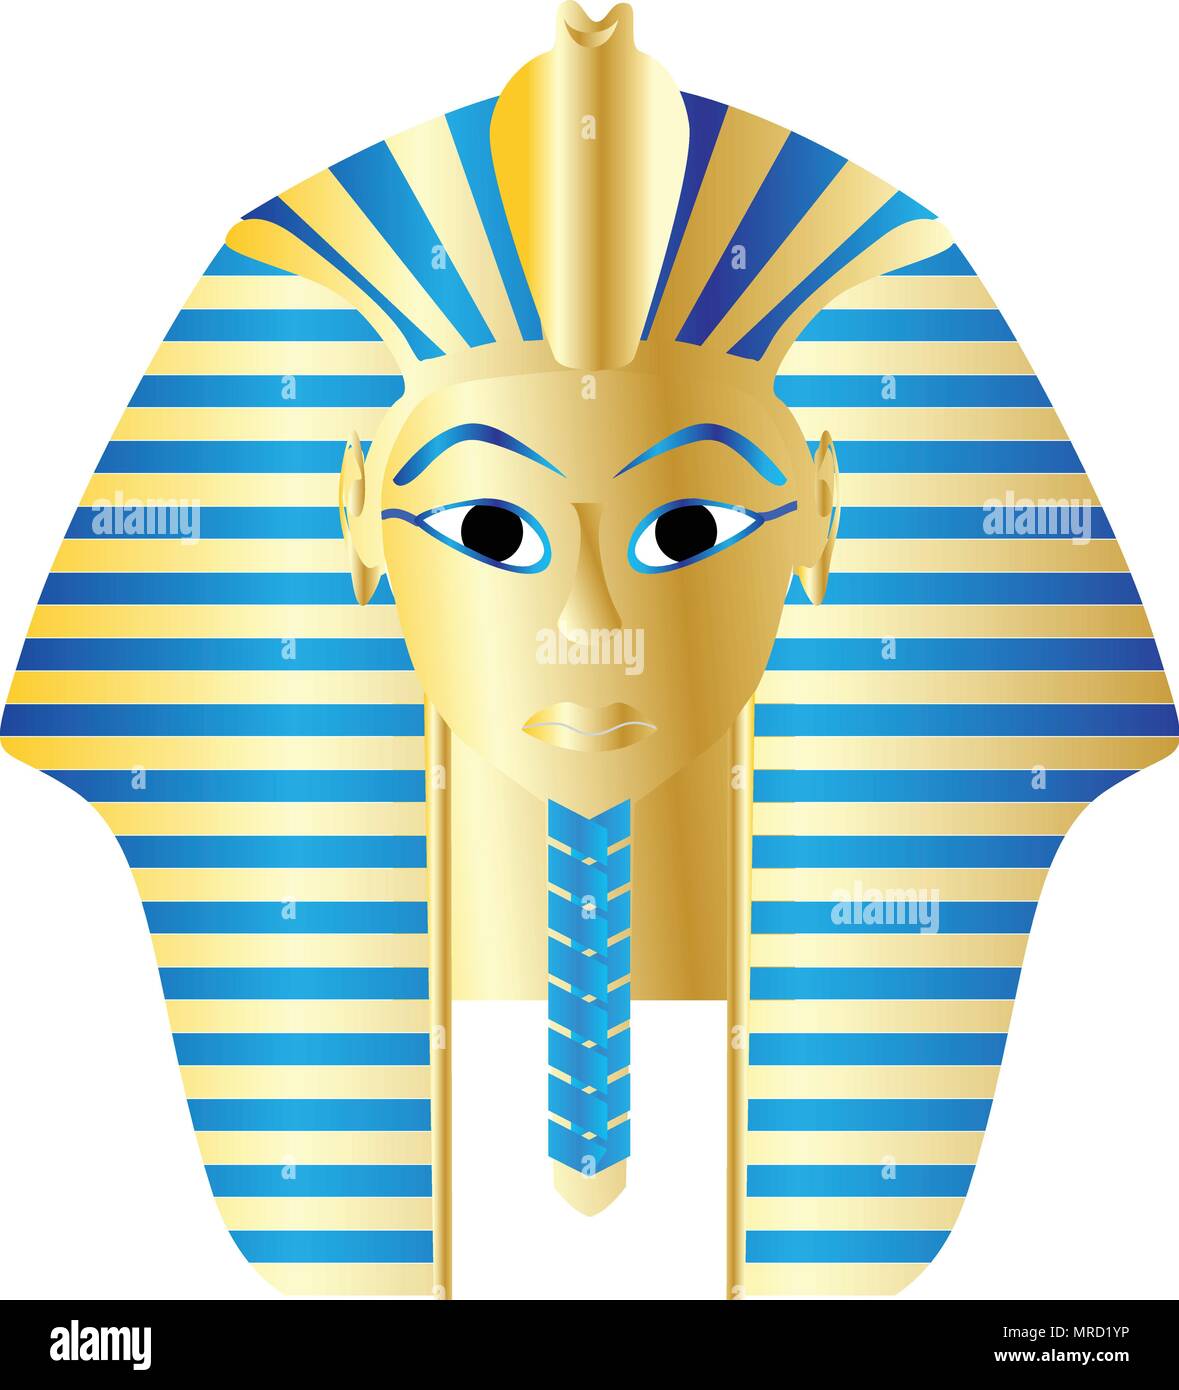 Egyptian style golden pharaoh portrait vector illustration Stock Vector